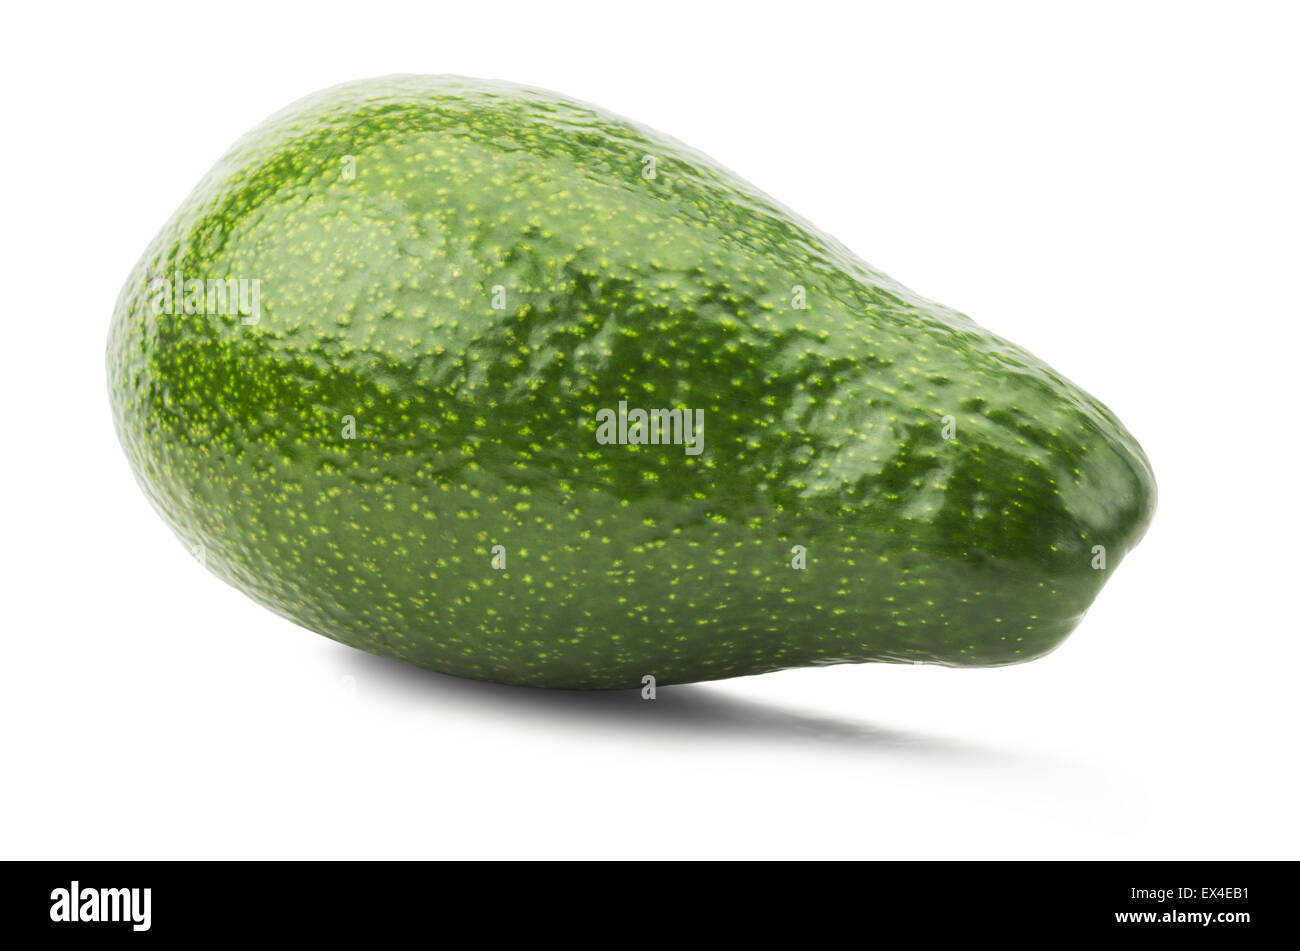 green avocado isolated on the white background. Stock Photo